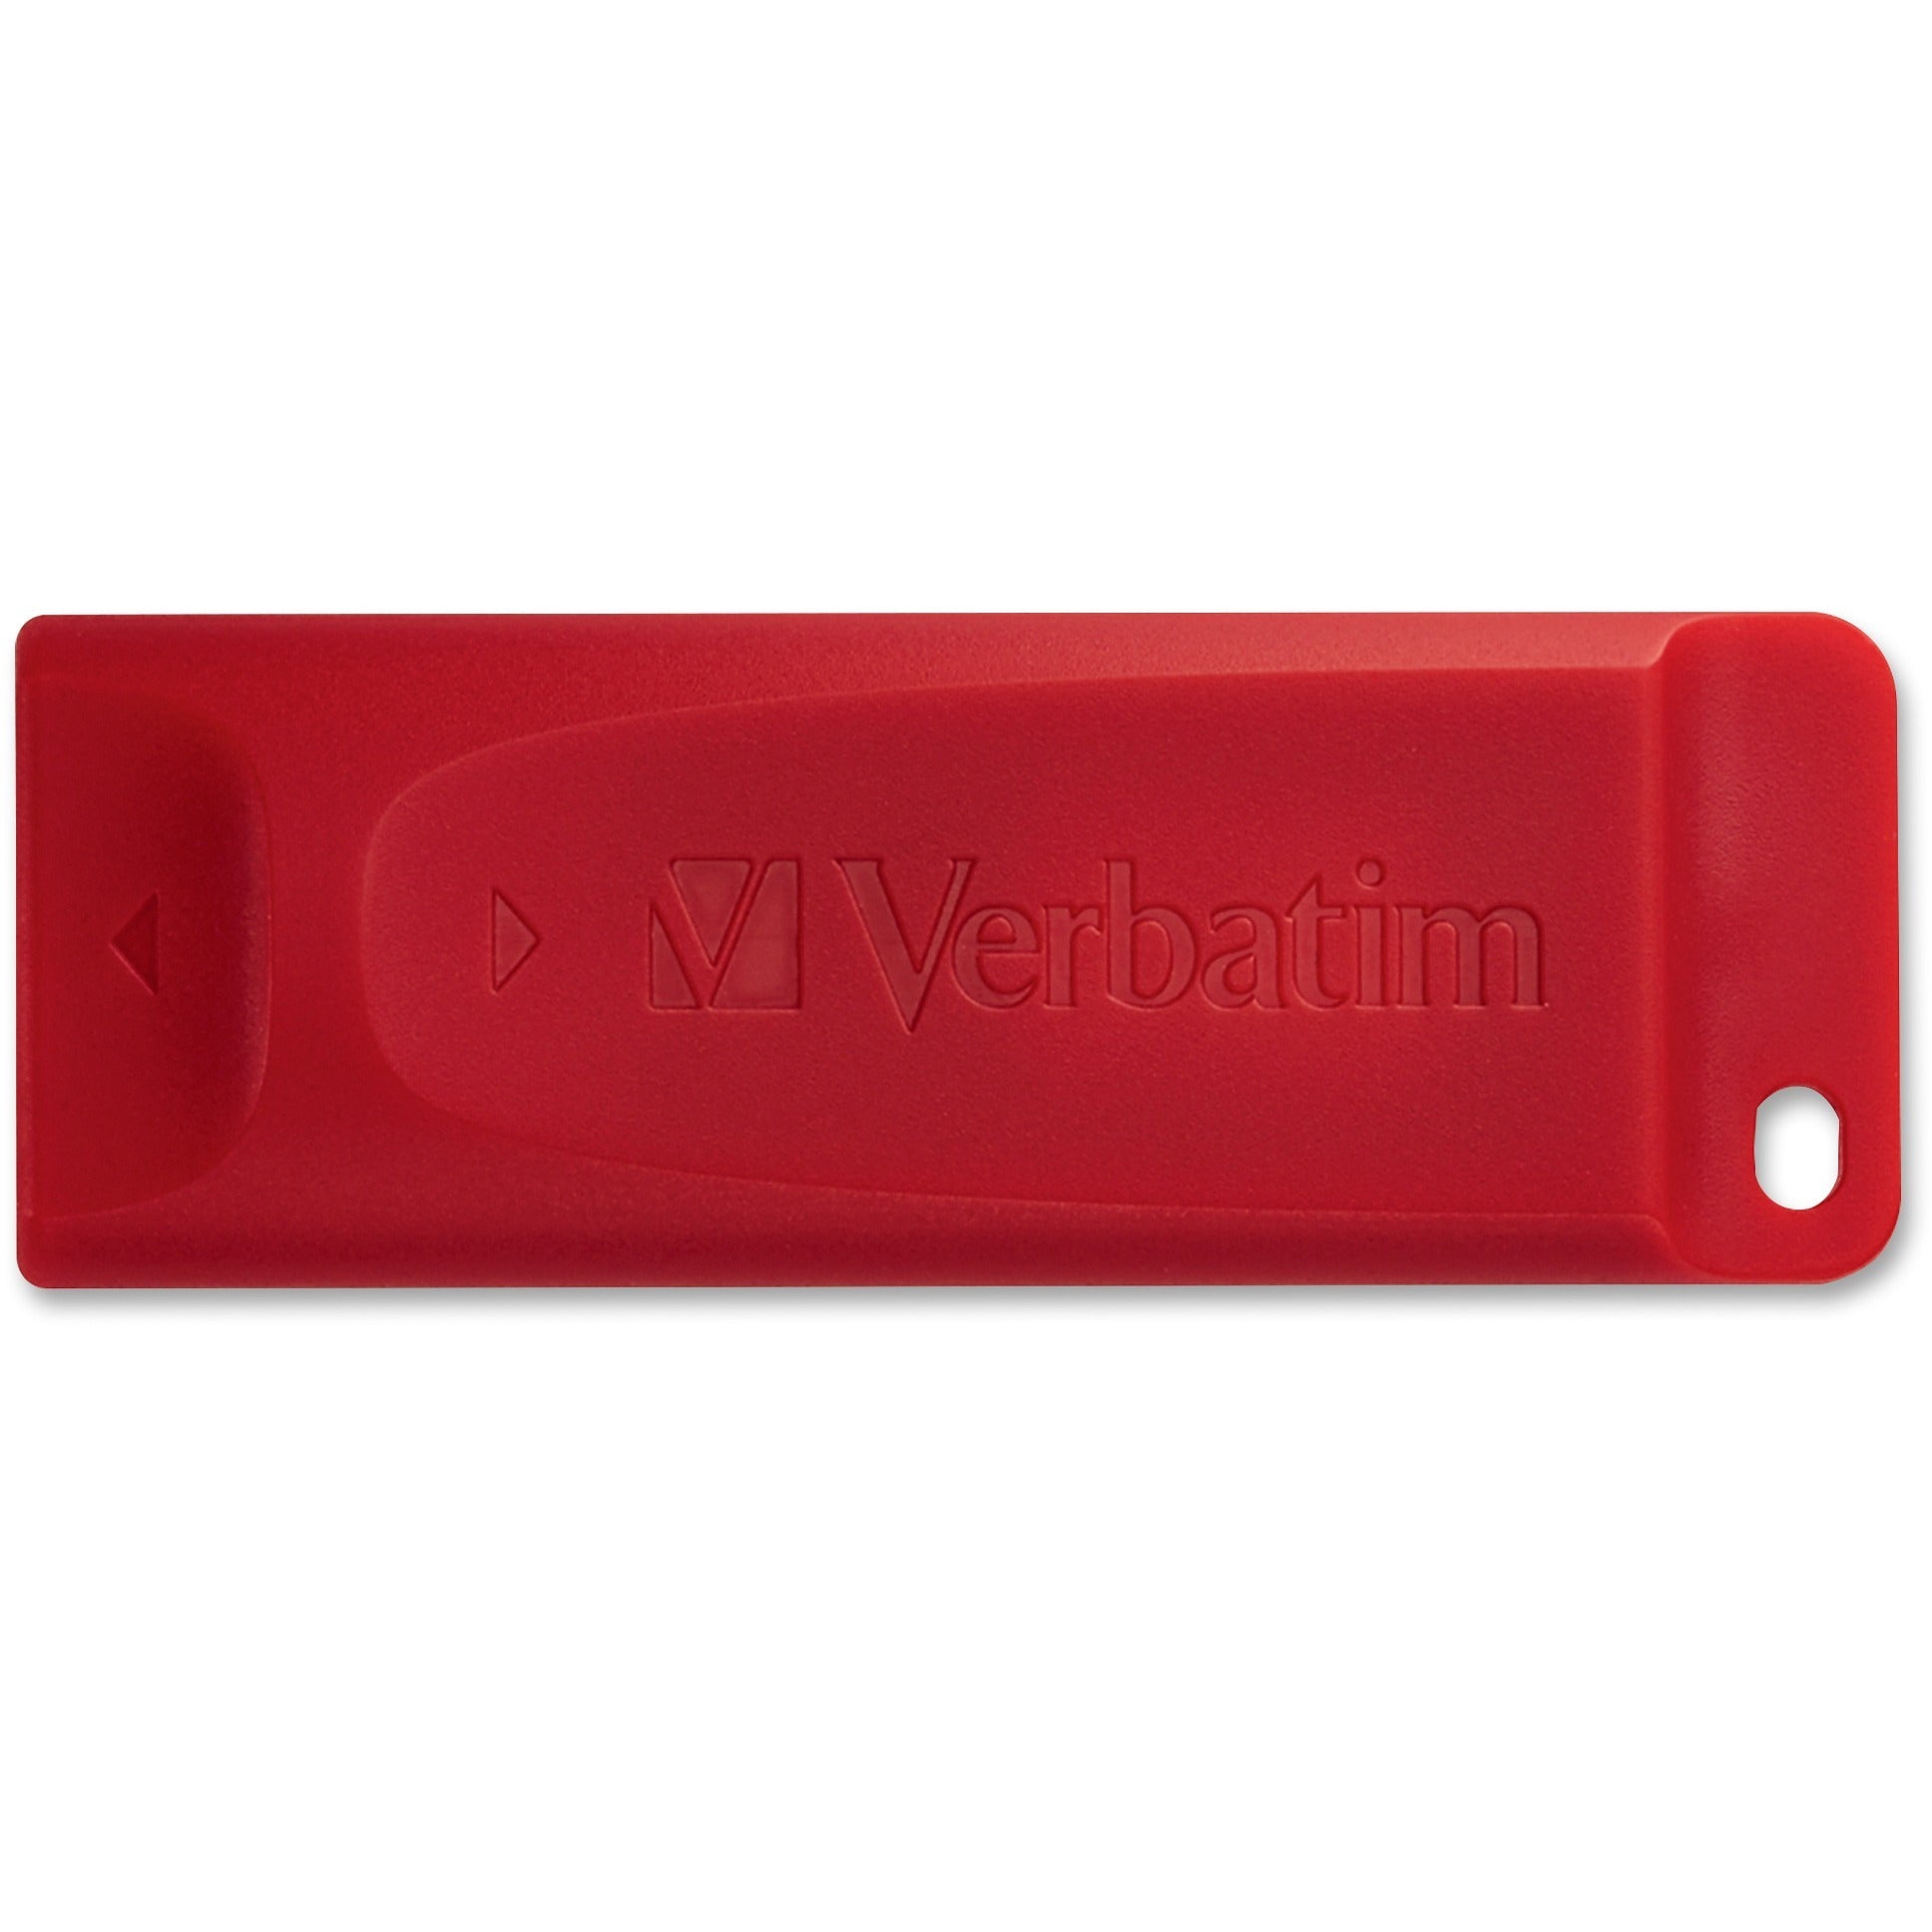 verbatim-4gb-store-n-go-usb-flash-drives-4-gb-usb-20-red-4-pack_ver95236pk - 2